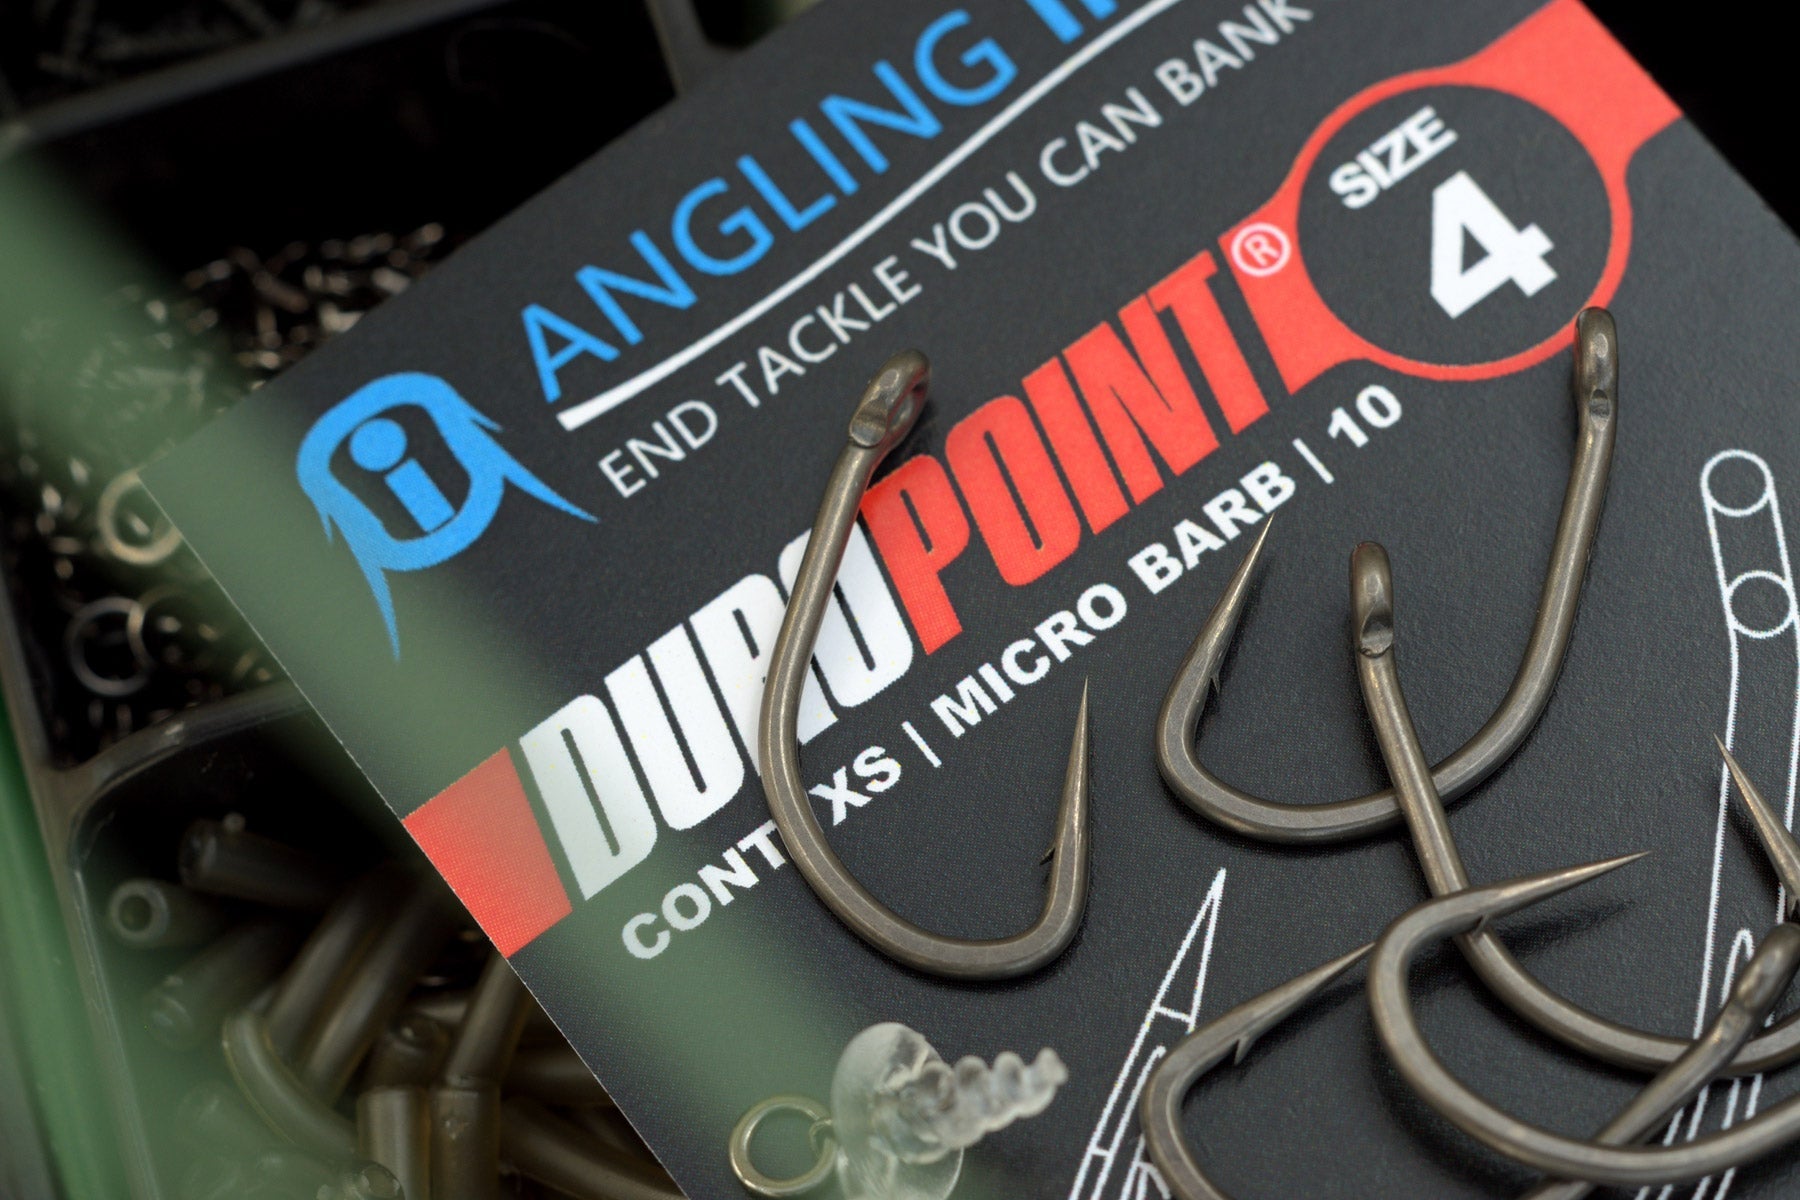 Duropoint® Carp Hooks - Razor sharp Chod, Curve shank, Wide gape, Longshank  and Continental carp hook patterns - By Angling Iron